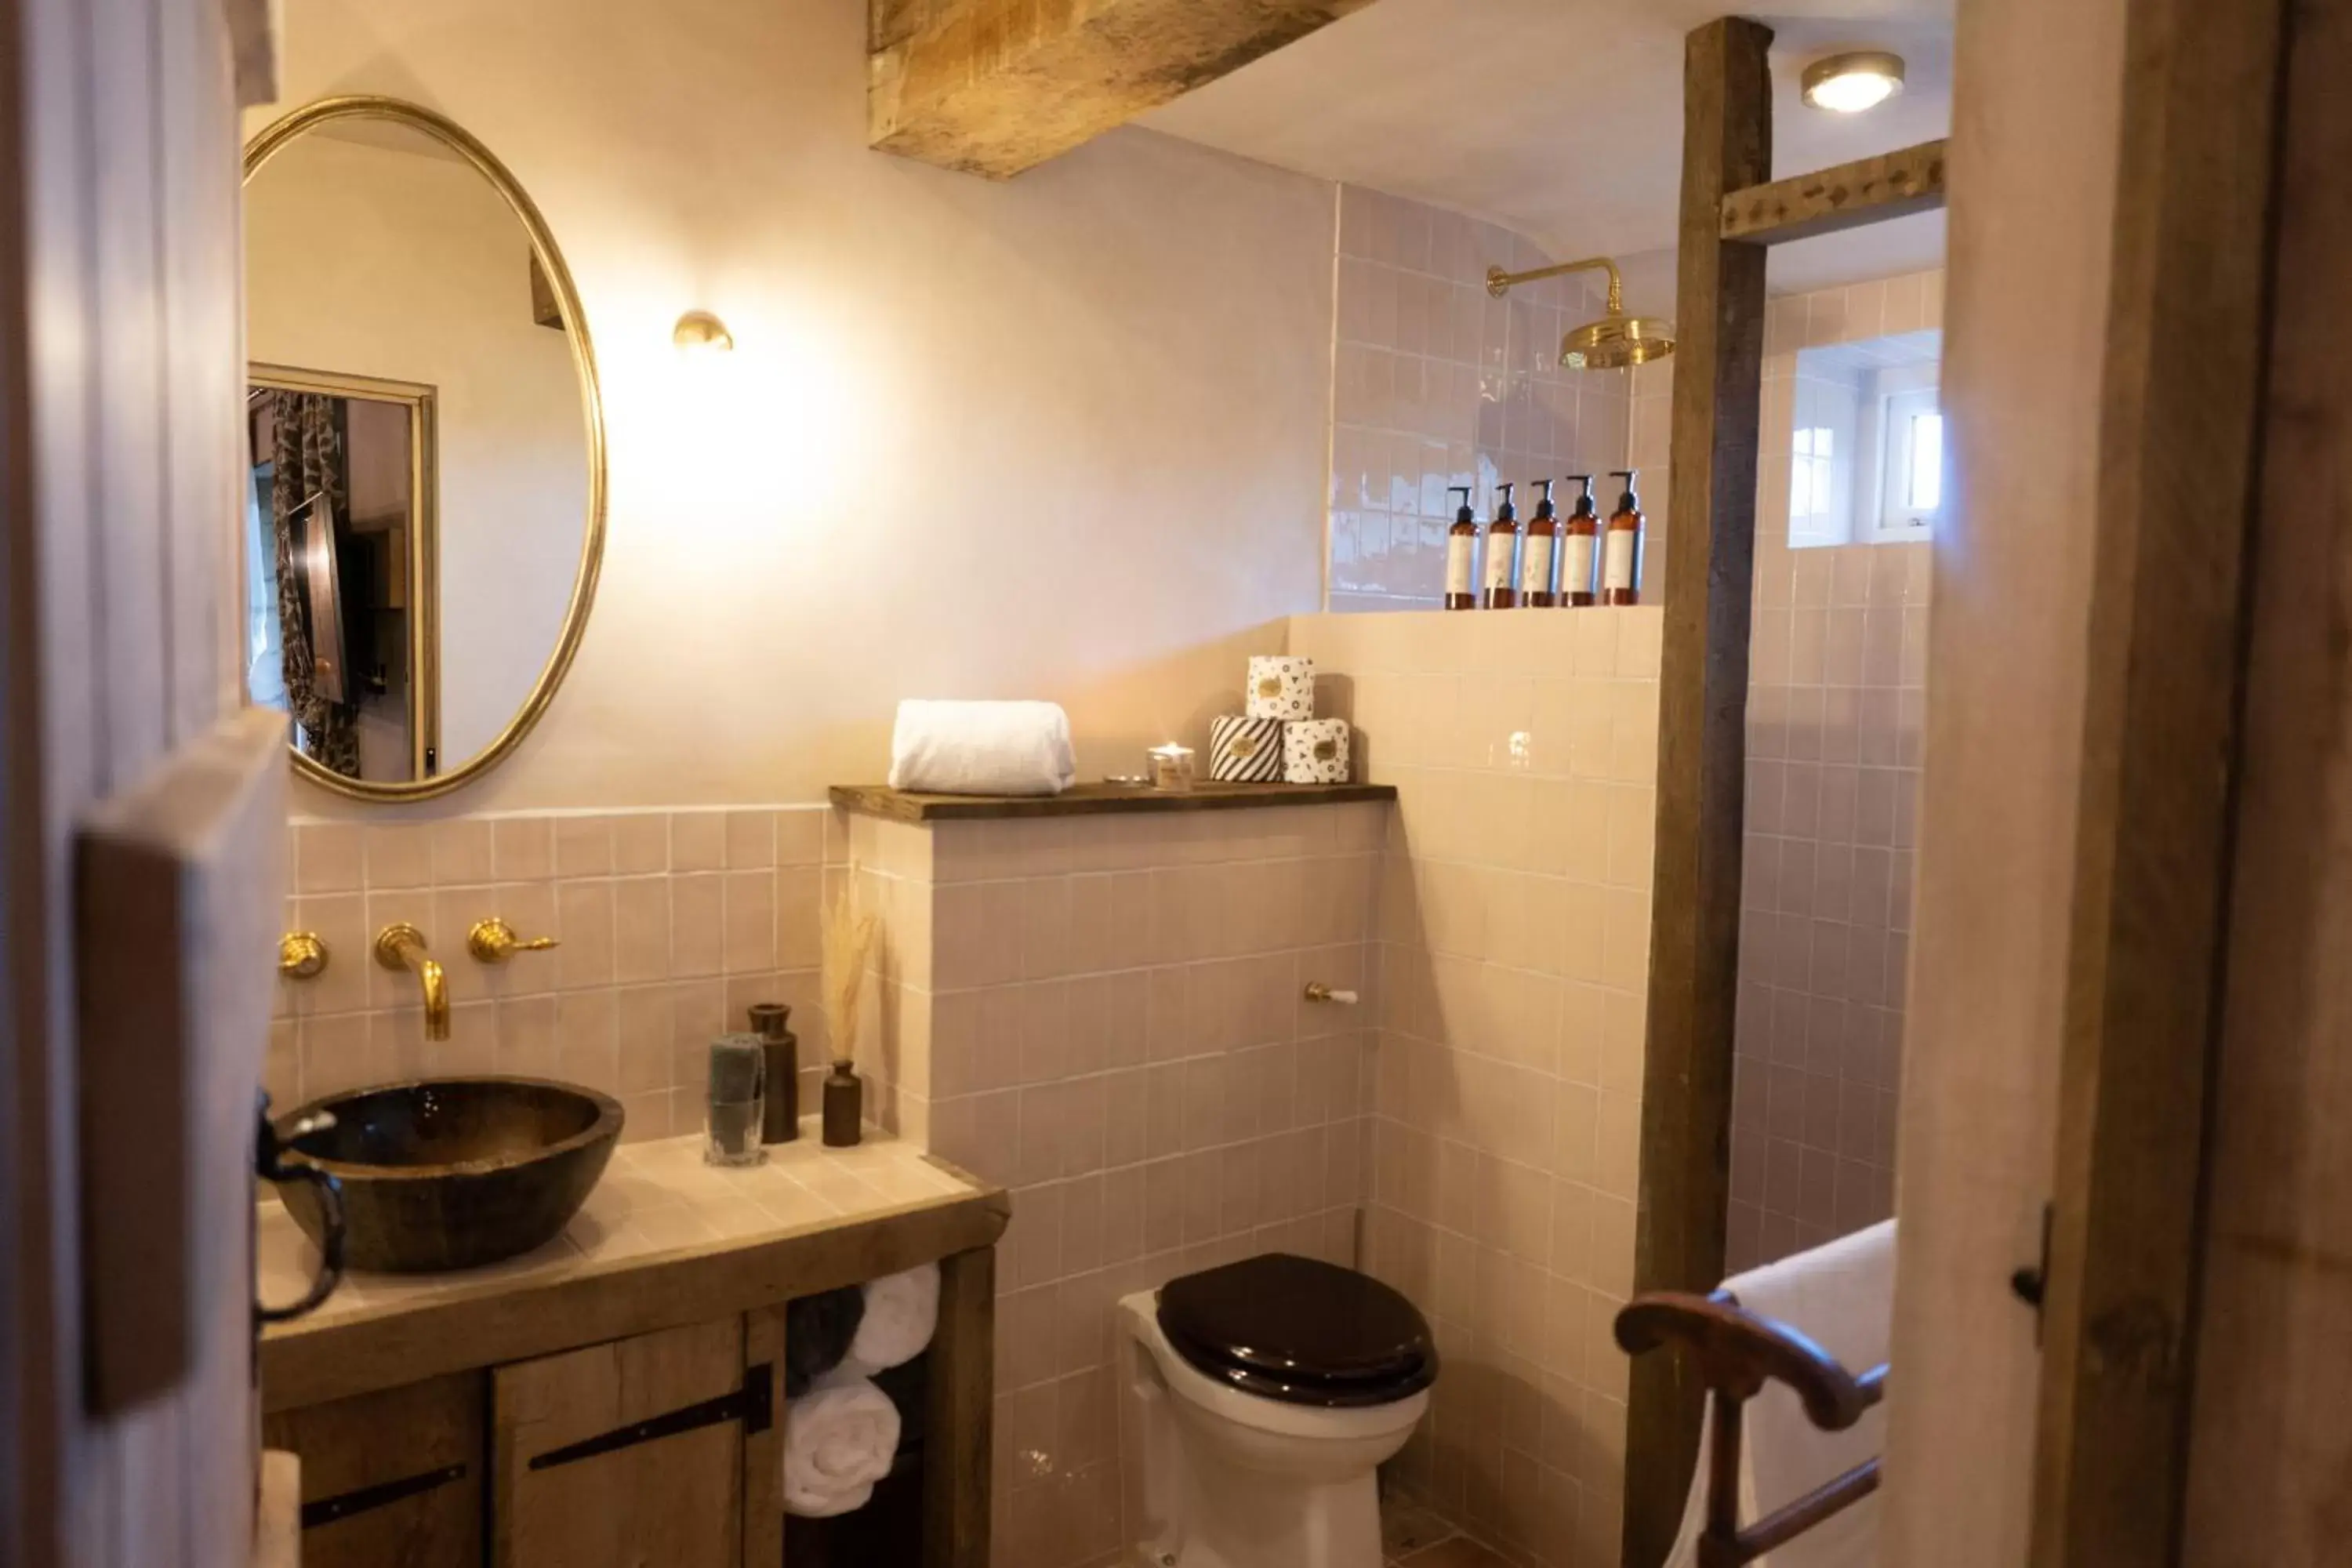 Shower, Bathroom in Outbuildings Dorset